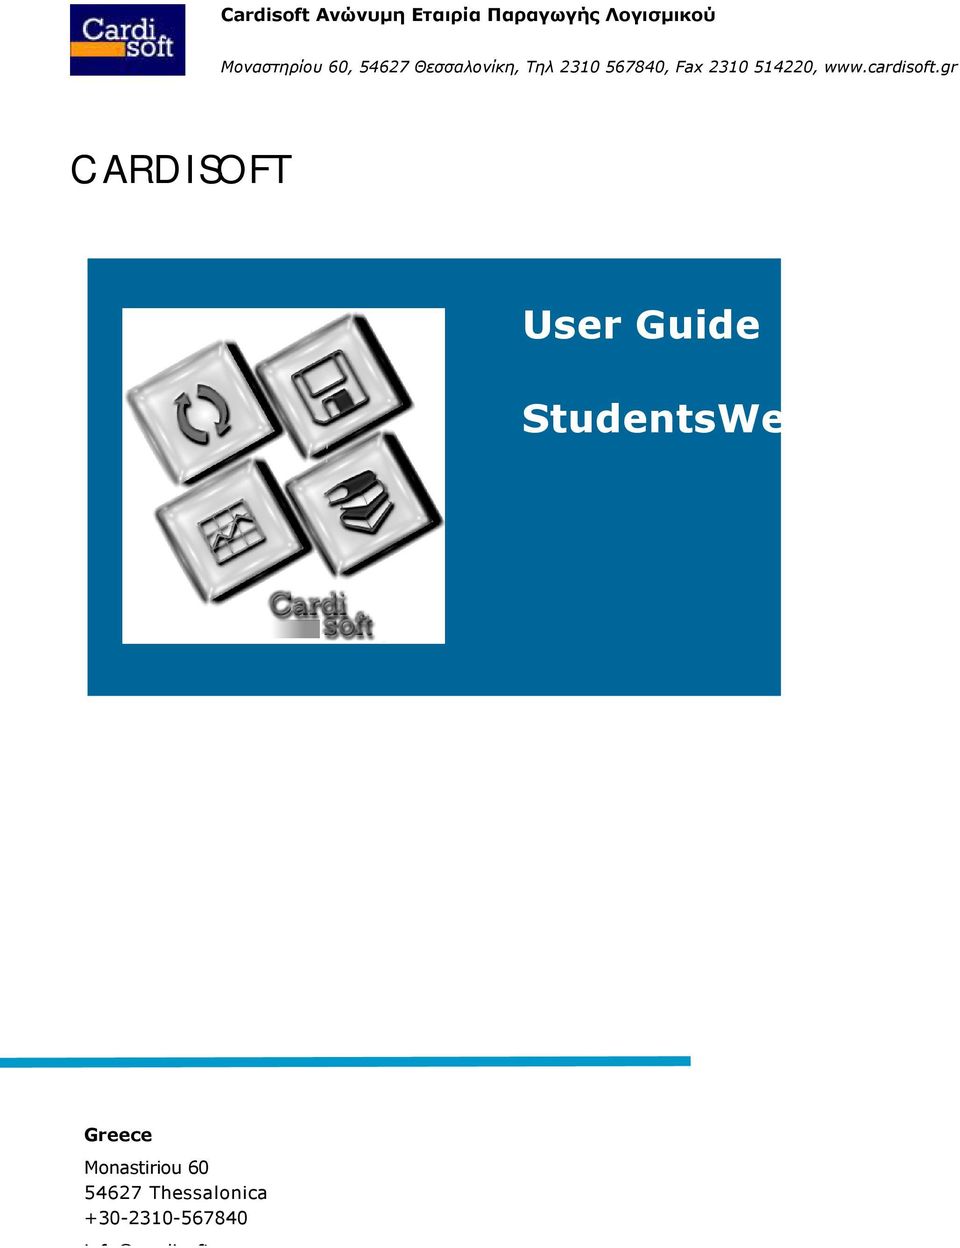 cardisoft.gr CARDISOFT User Guide StudentsWeb VERSION 1.